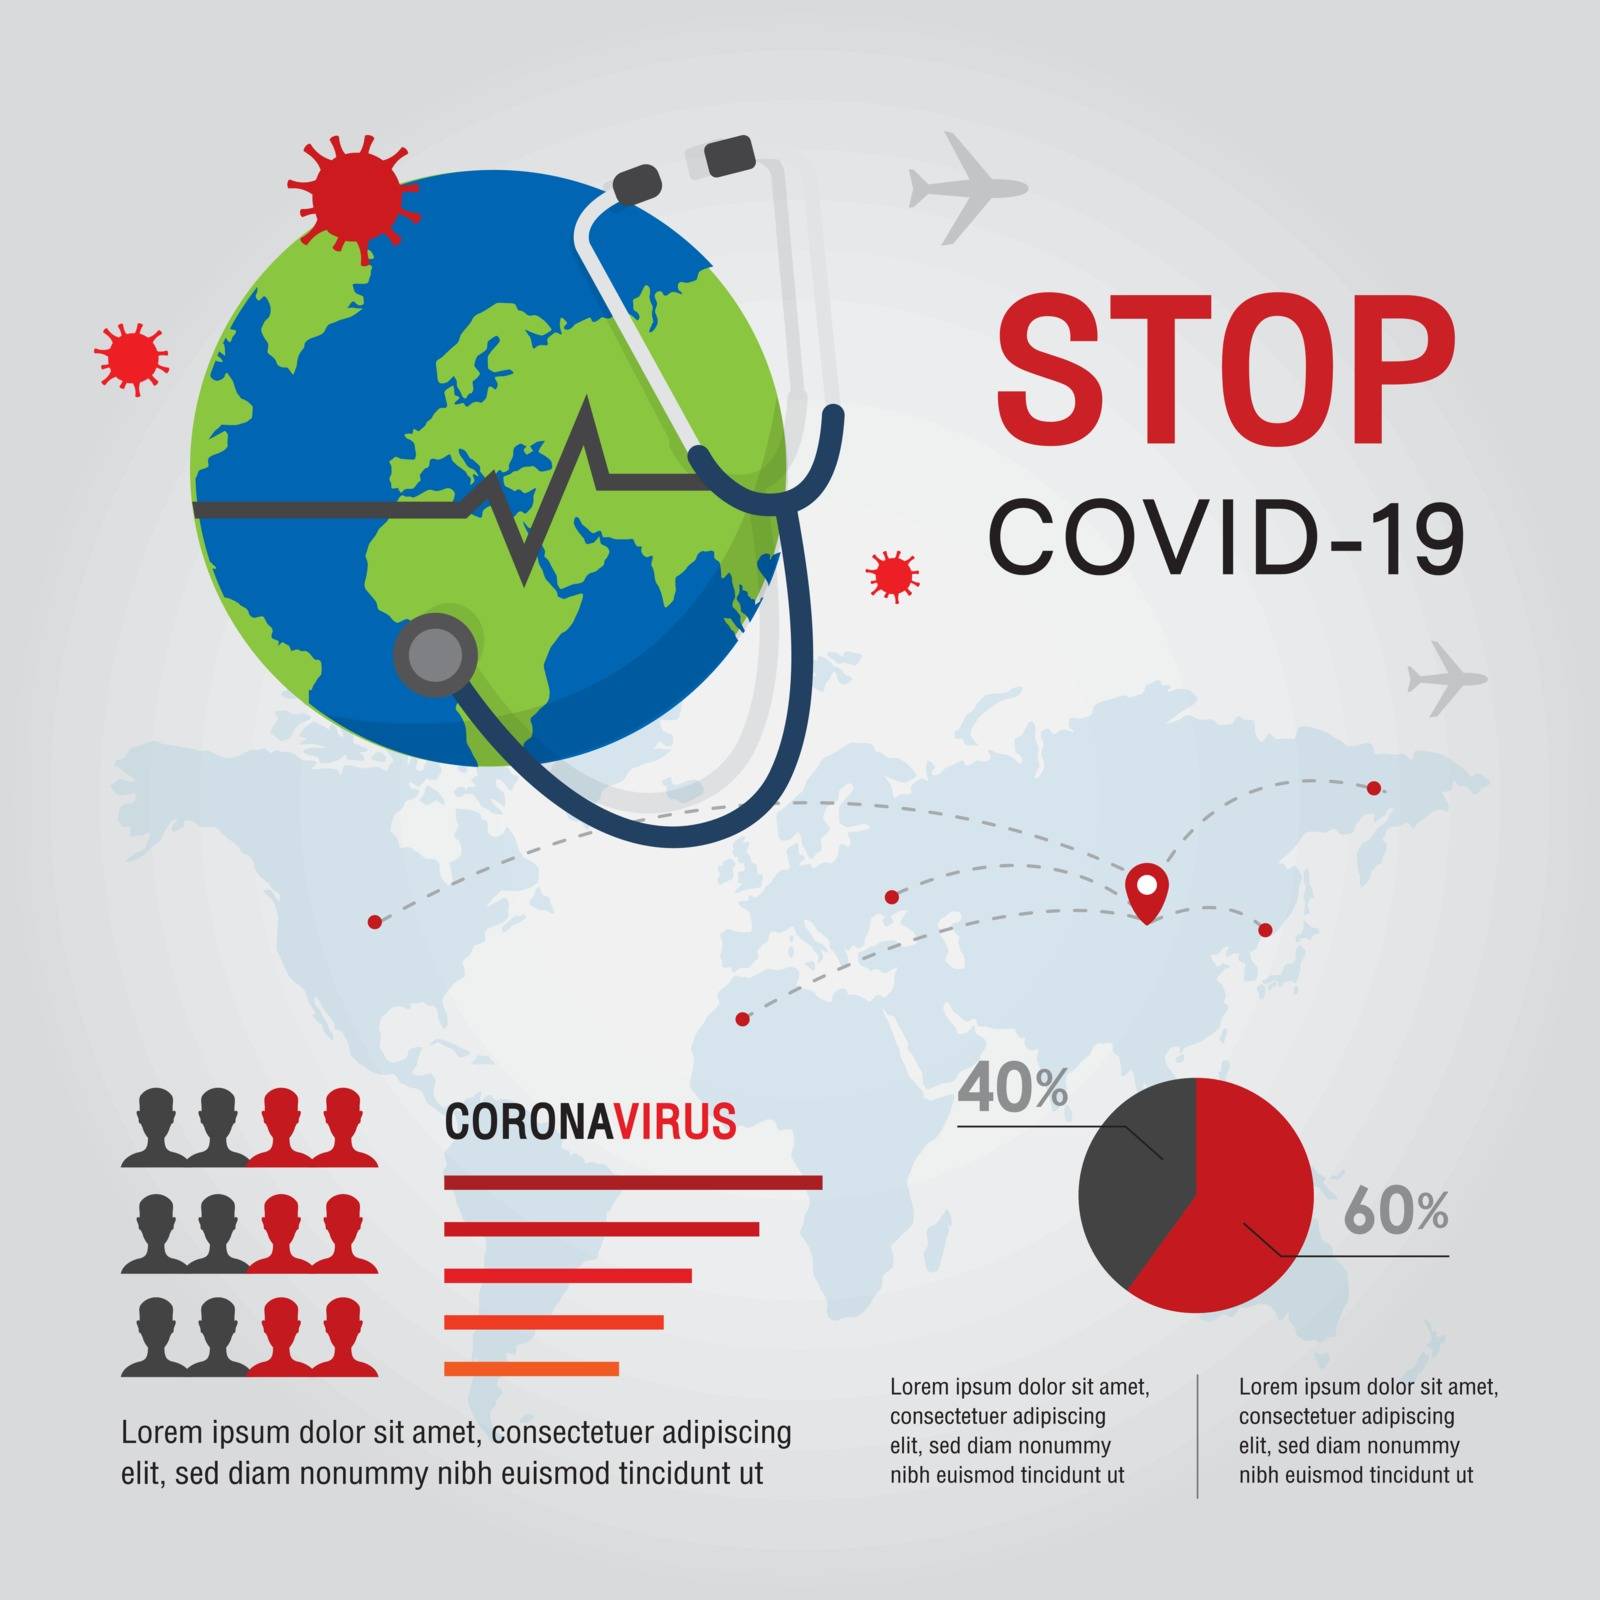 Coronavirus COVID-19 Flu spreading around the world. Stop Covid-19 Vector illustration. by Ienjoyeverytime